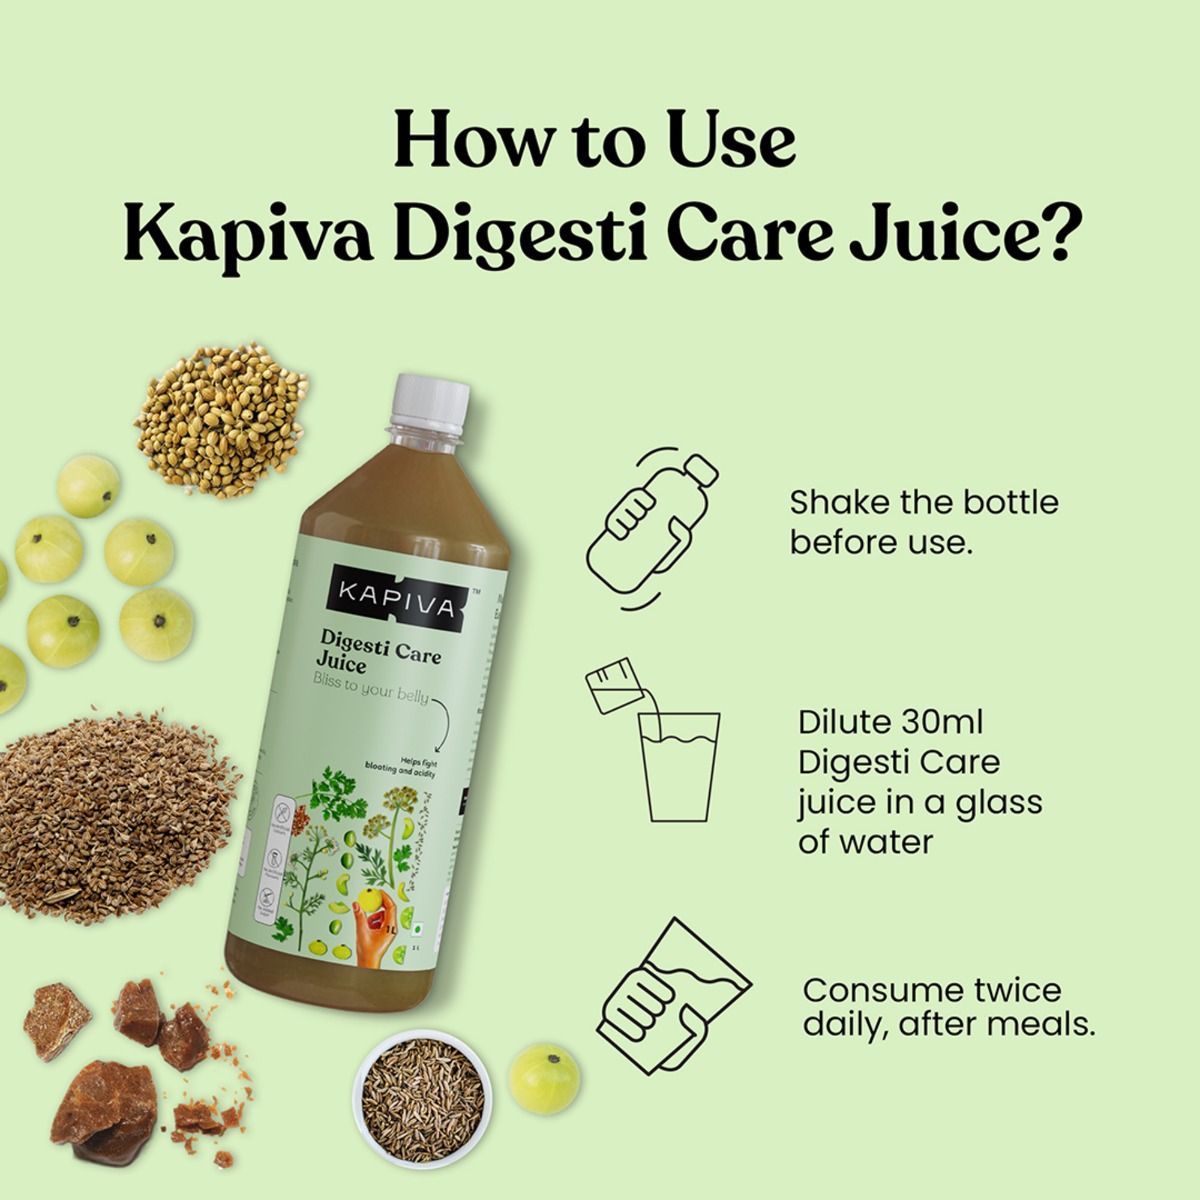 Kapiva Digesti Care Juice, 1 L, Pack of 1 